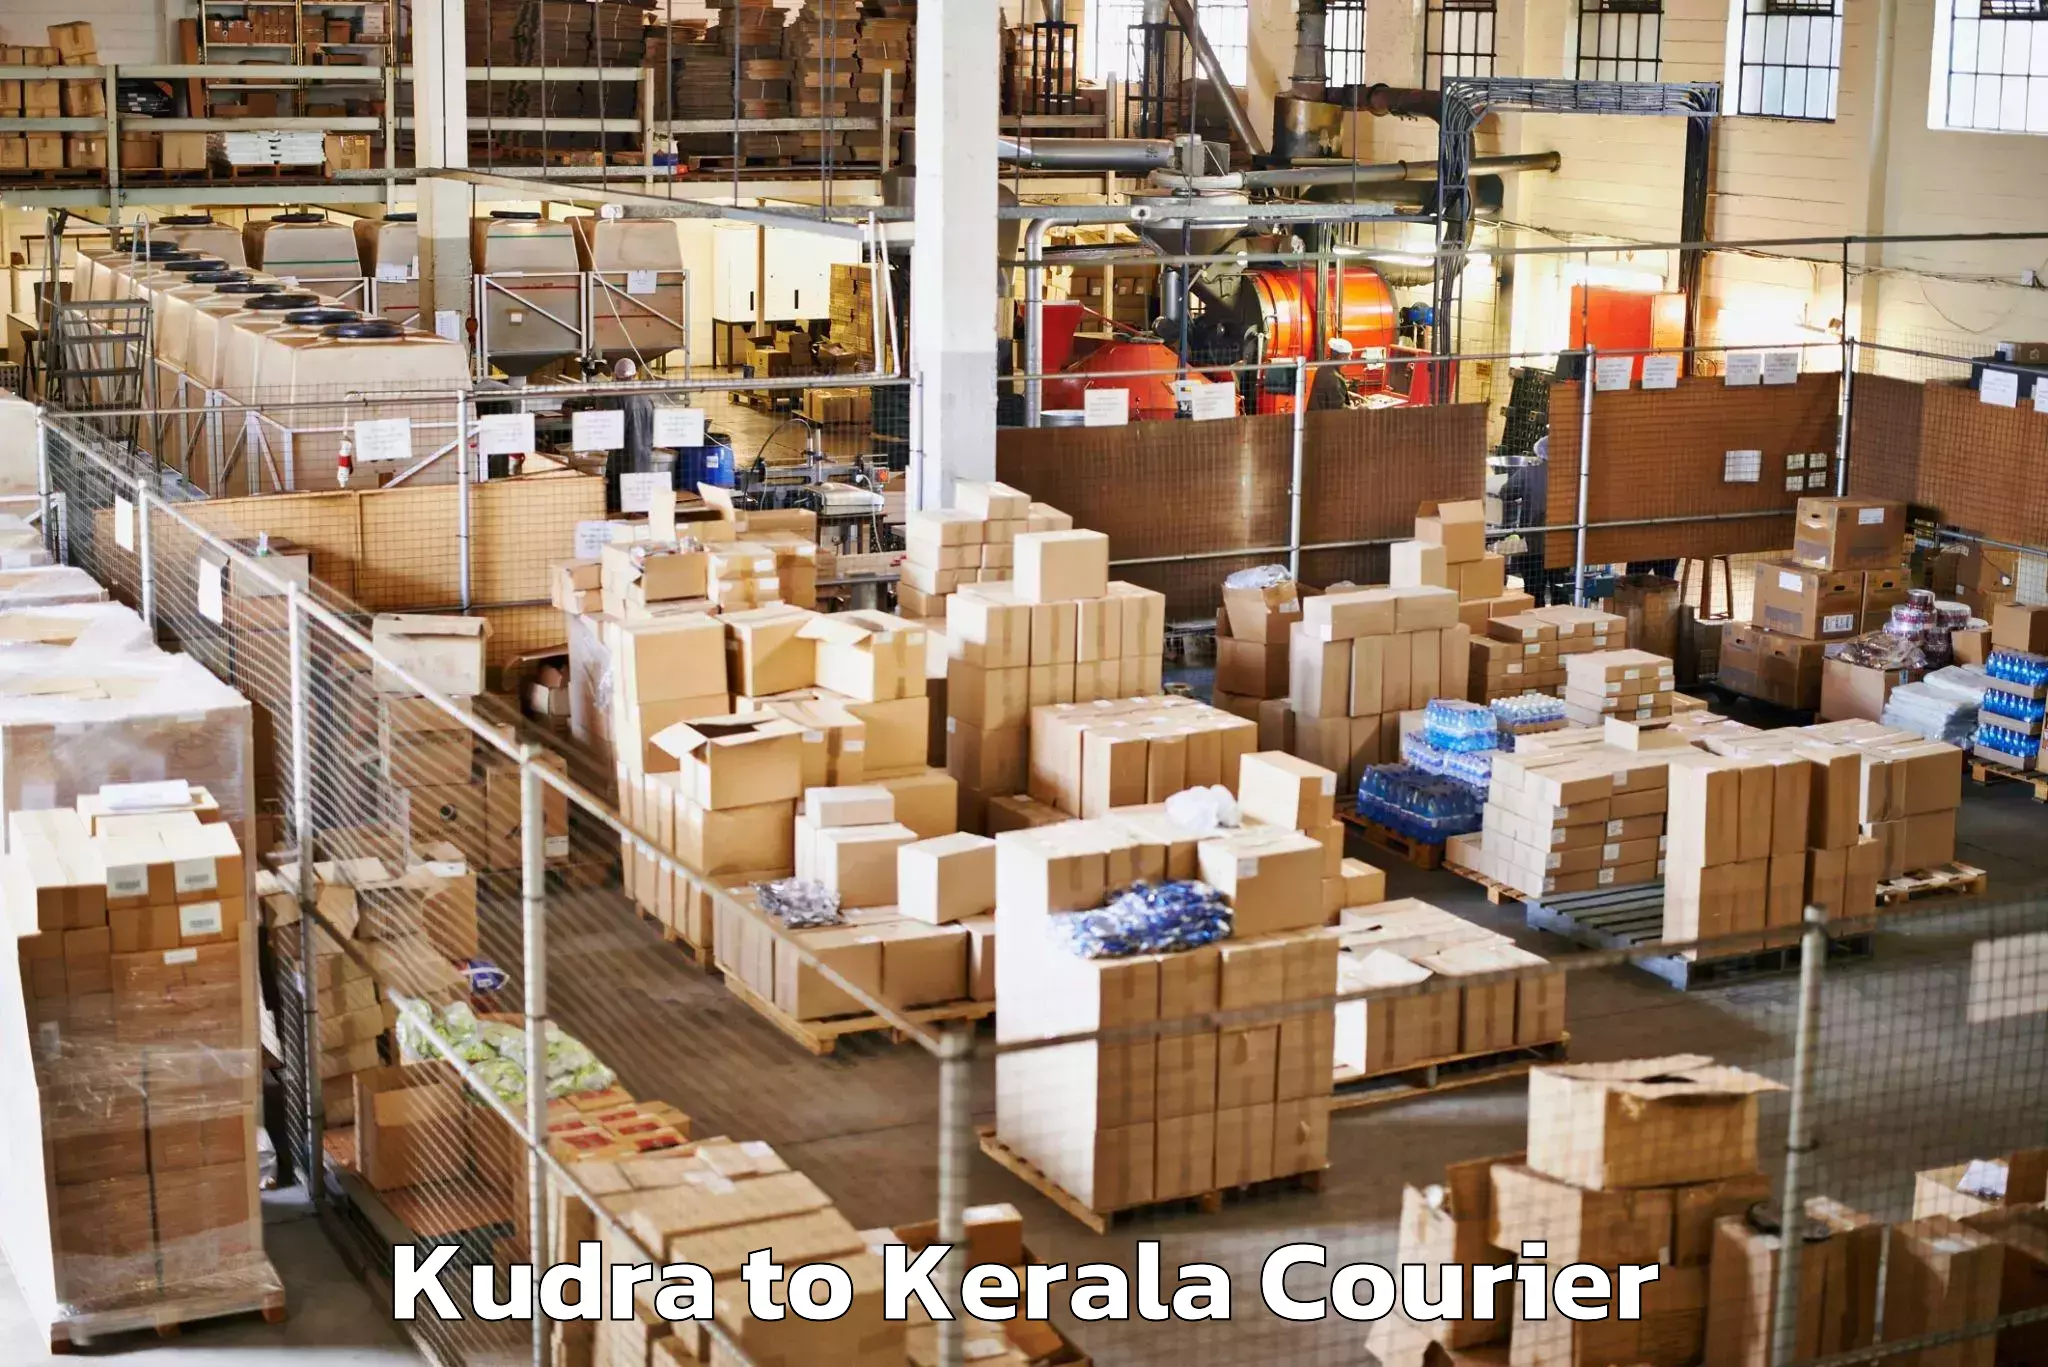 Luggage shipment specialists Kudra to Kerala